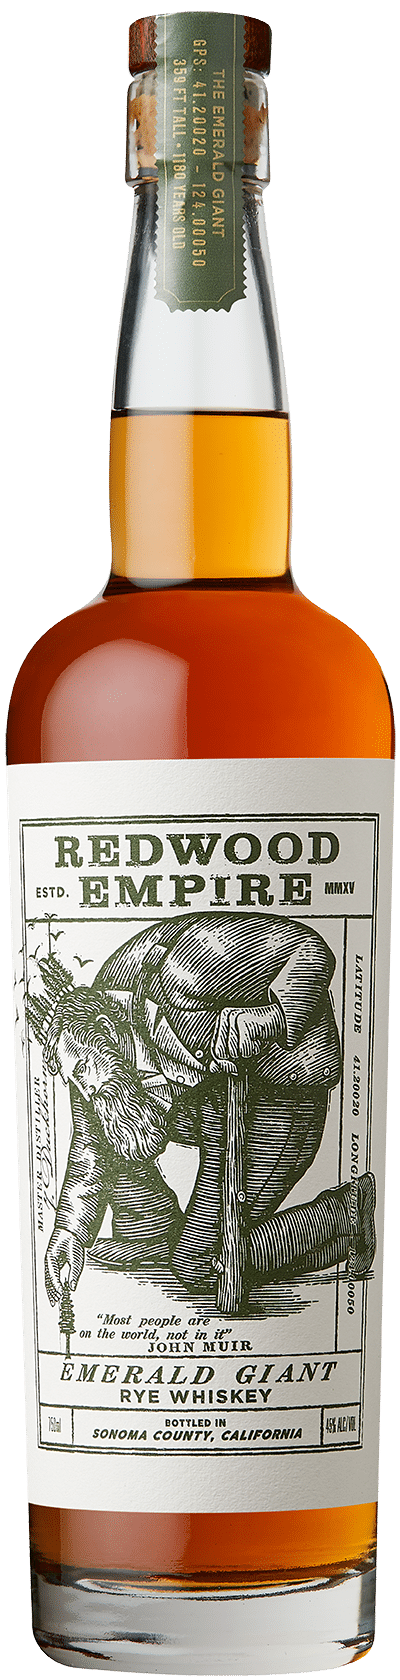 Redwood Empire - Emerald Giant - Rye Whiskey